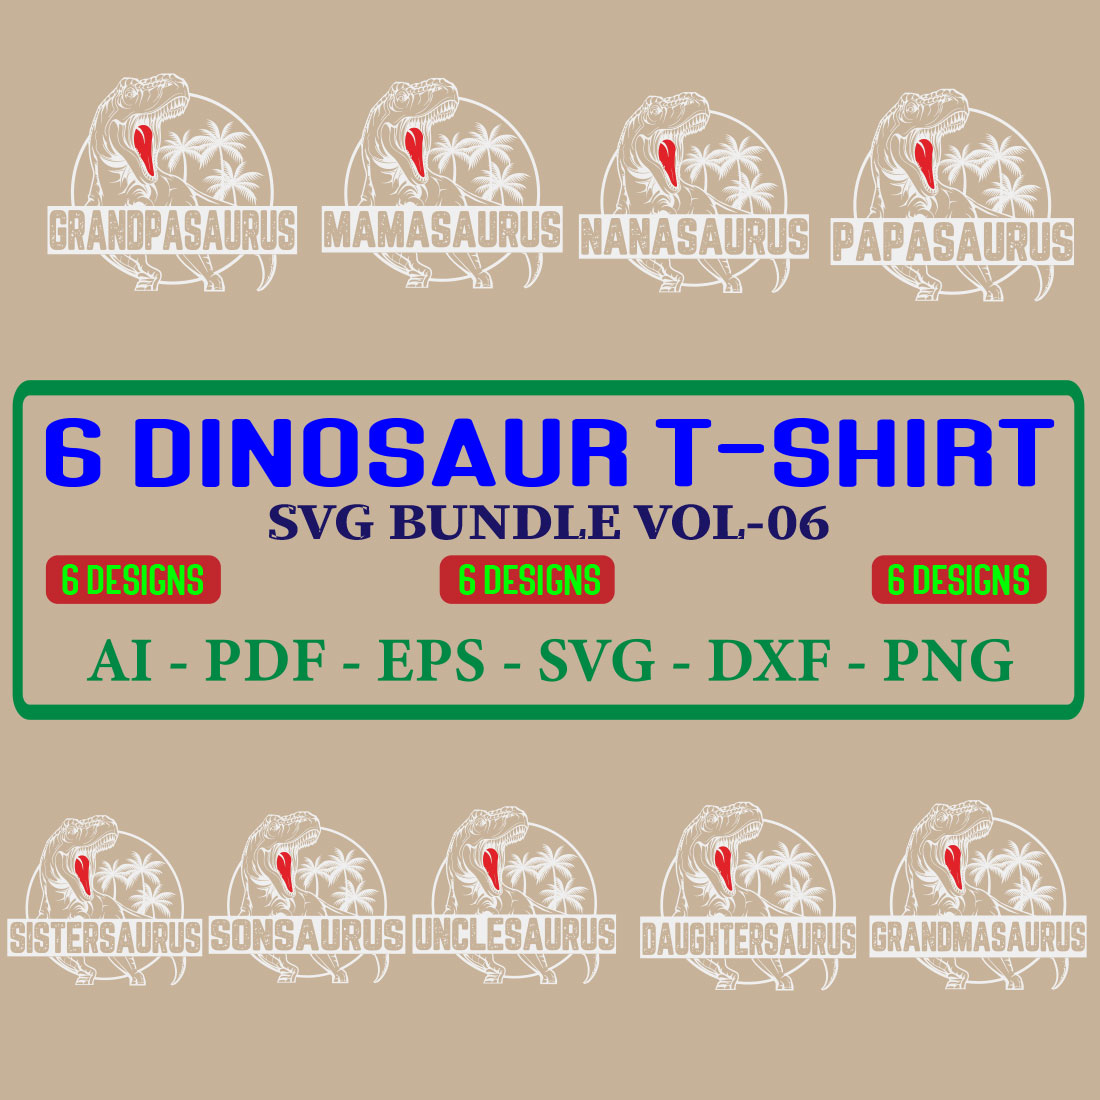 10 Dinosaur T-shirt SVG Bundle Vol-06 cover image.